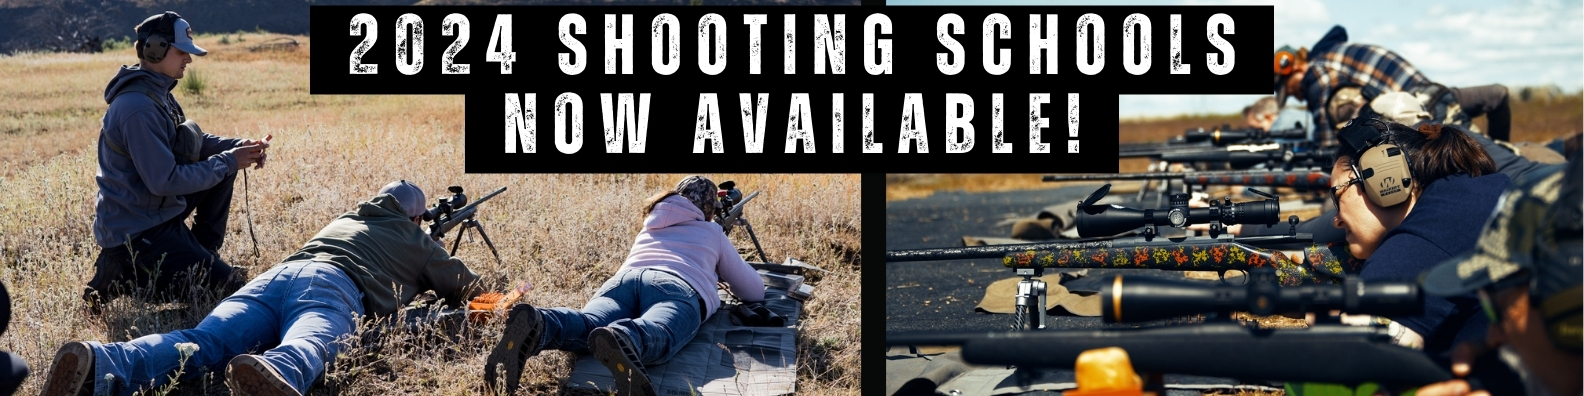 Long Range Shooting School, Shooting School, Long Range Shooting, Rifle practice, custom rifles, shooting school